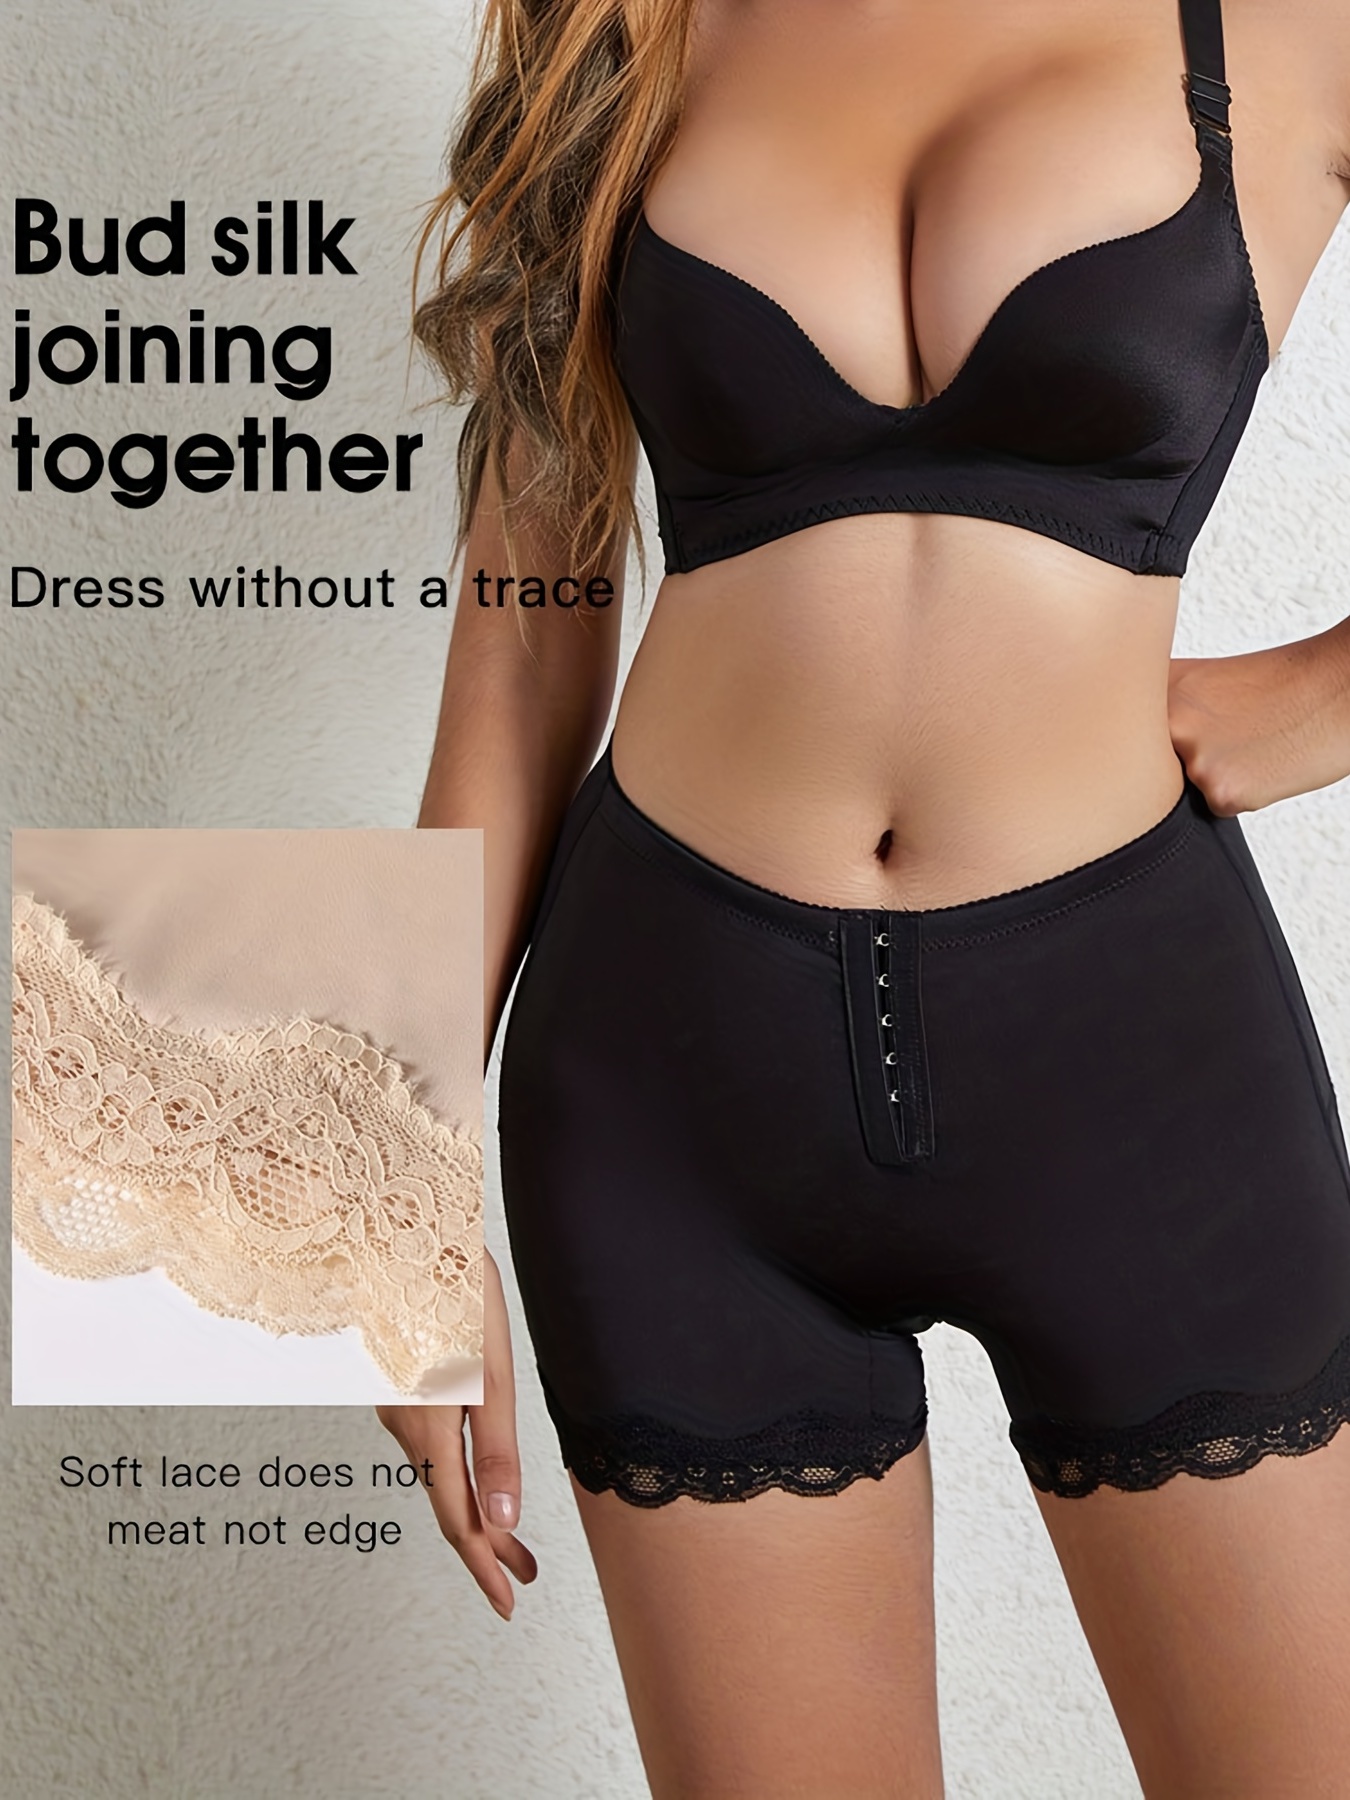 Mrat Seamless Underwear Women Breathable Panty Ladies Lingerie